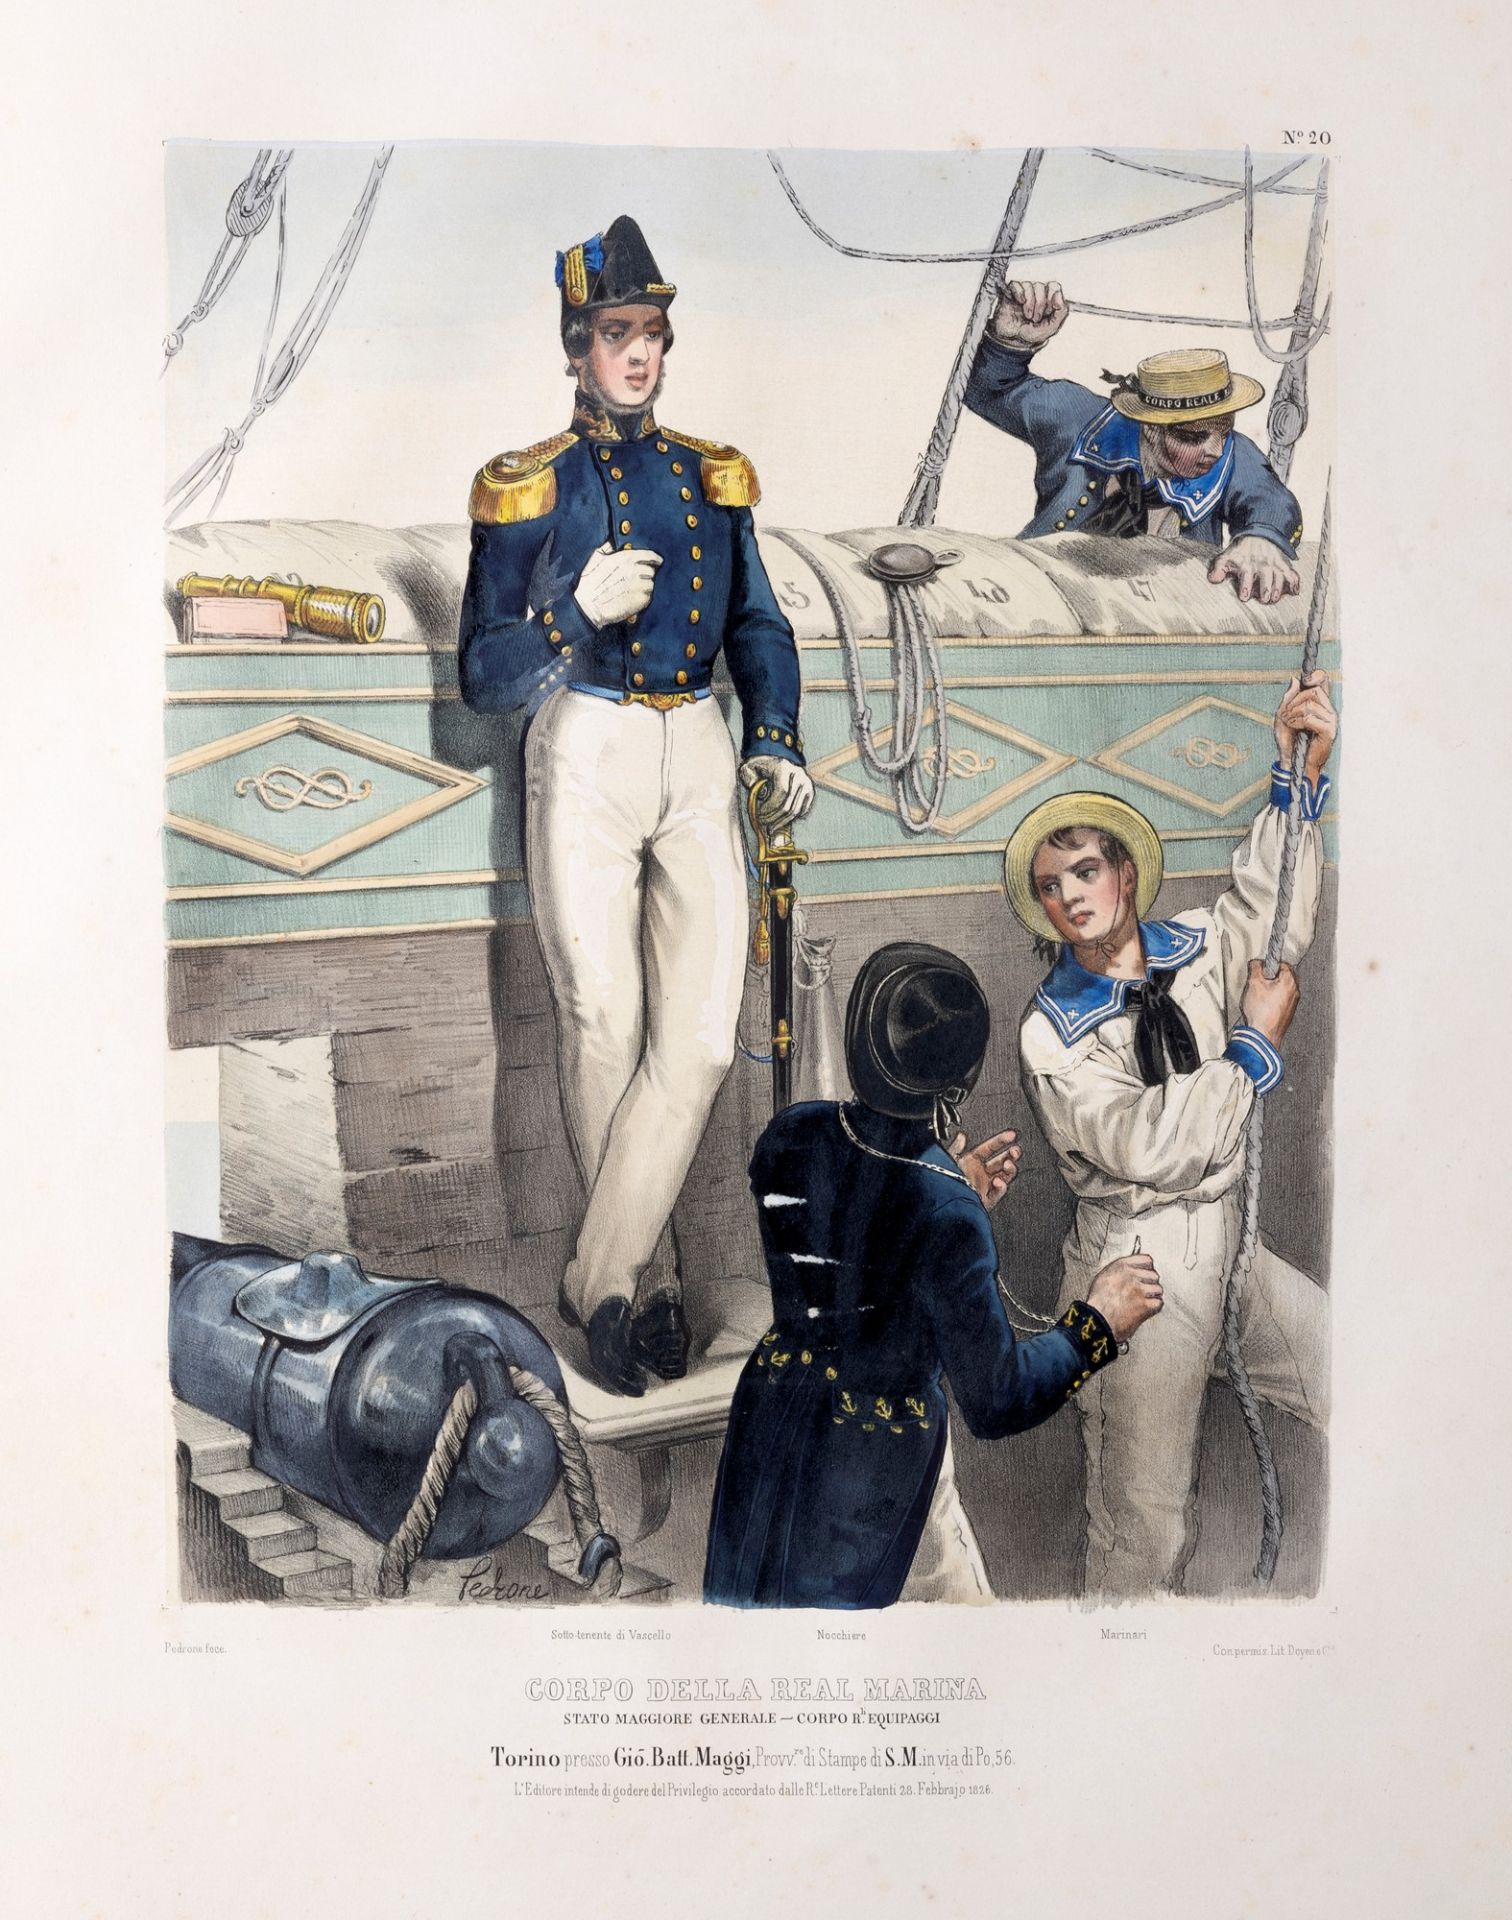 Militaria - Maggi, Giovanni Battista - Military uniforms of the army of S. M. Sarda - Image 3 of 3